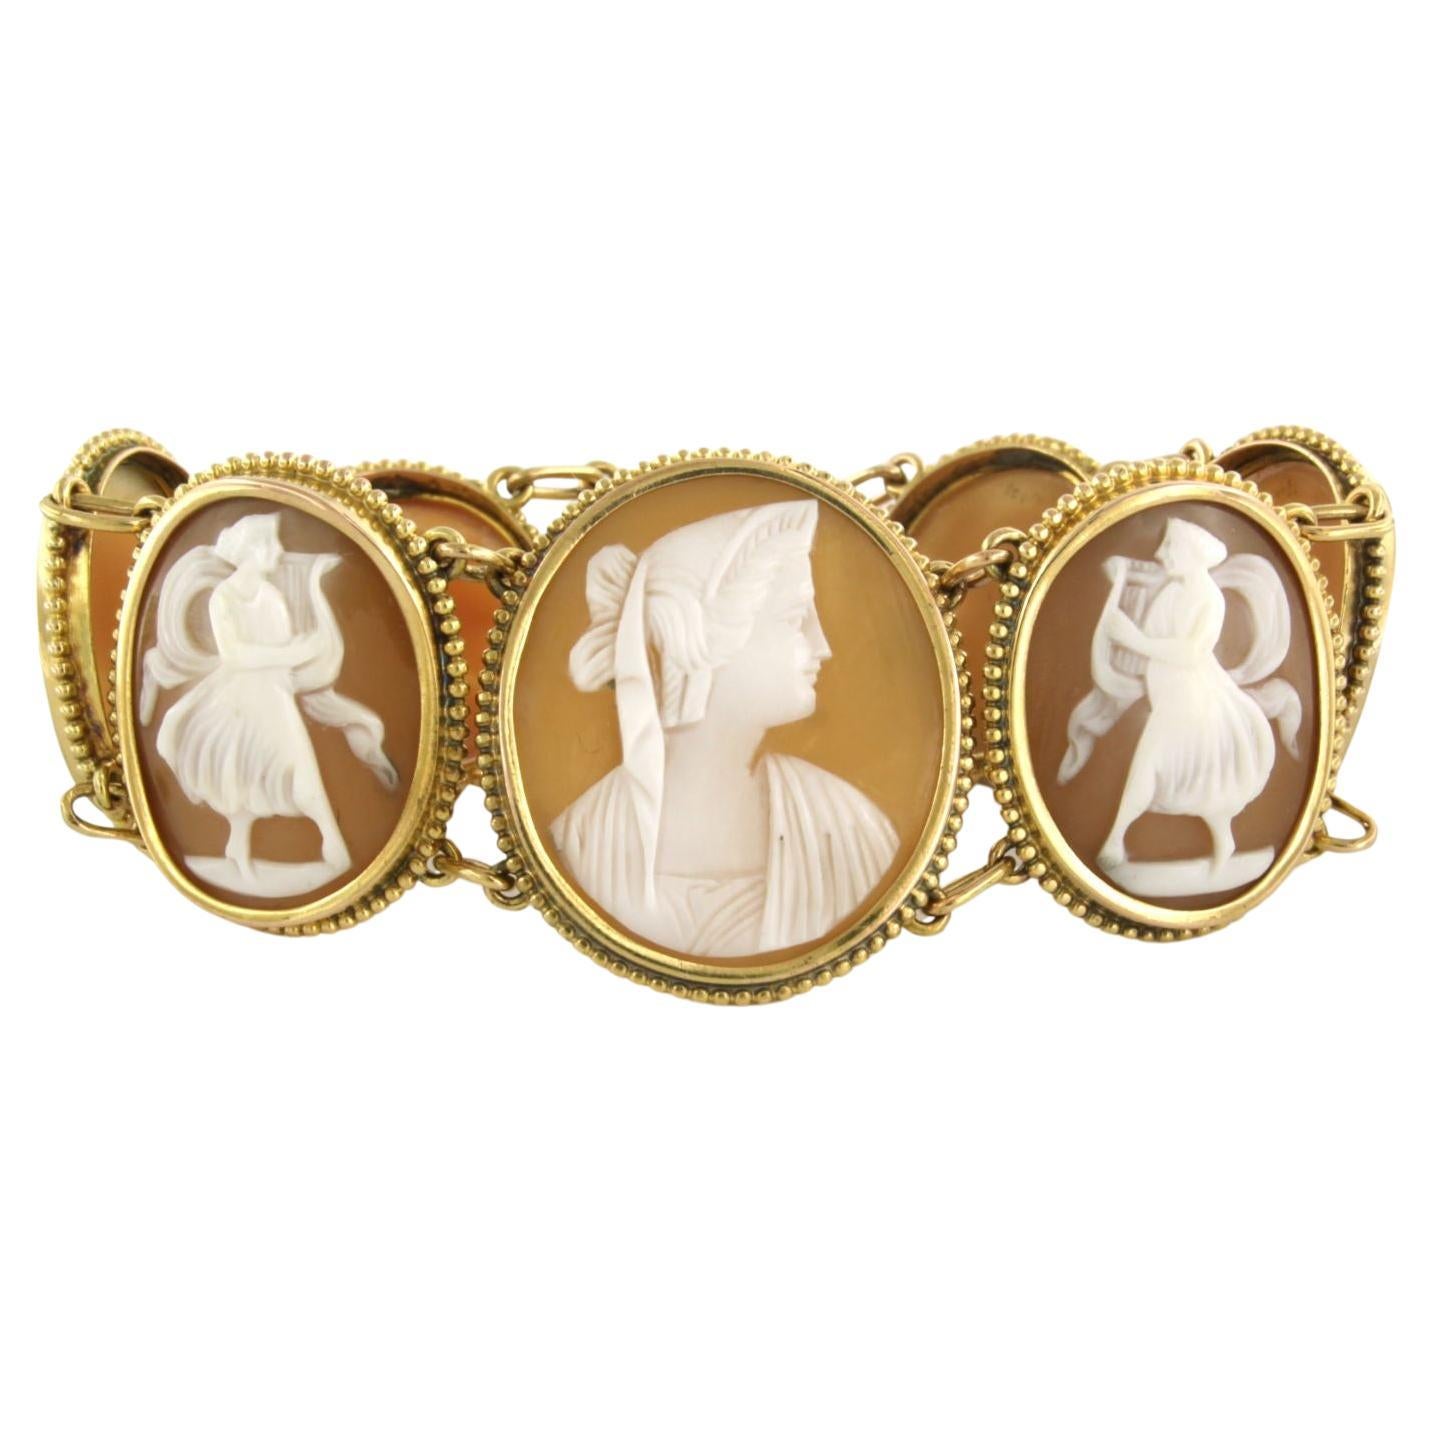 Bracelet with ladies portrait camee For Sale